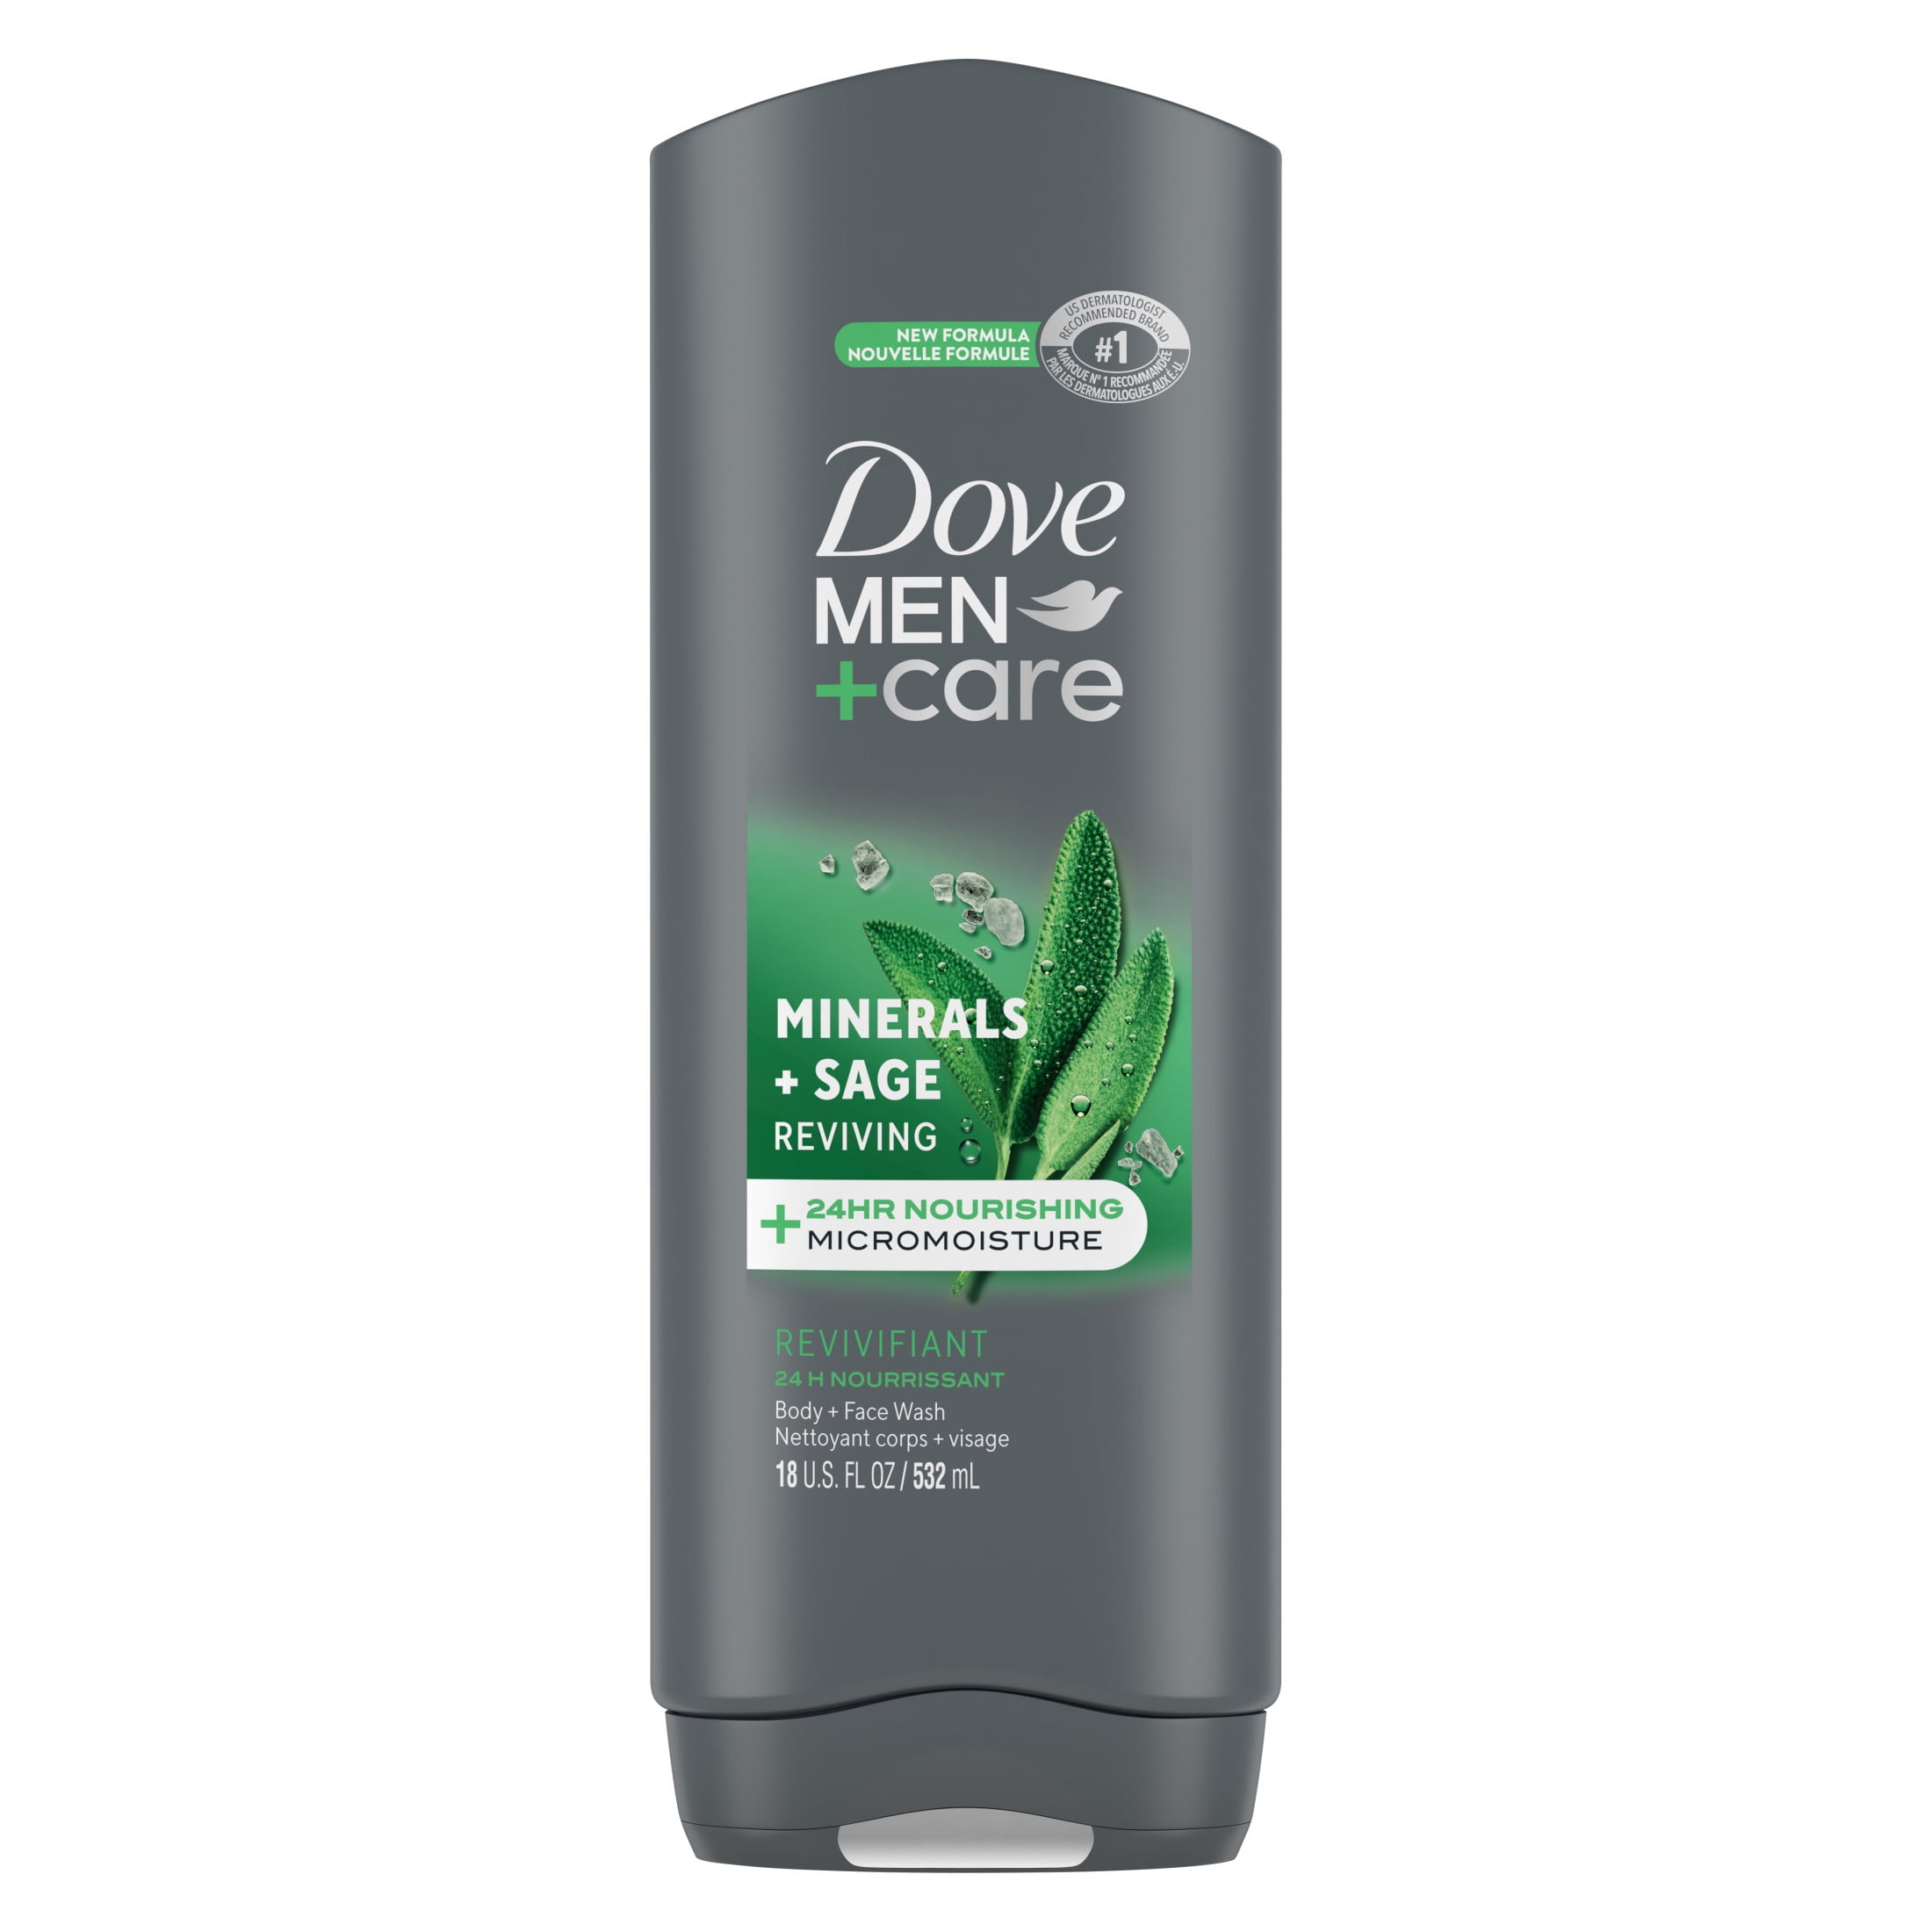 Dove Men+Care Body and Face Wash Liquid Body Wash for Men Reviving Minerals + Sage, 18 oz